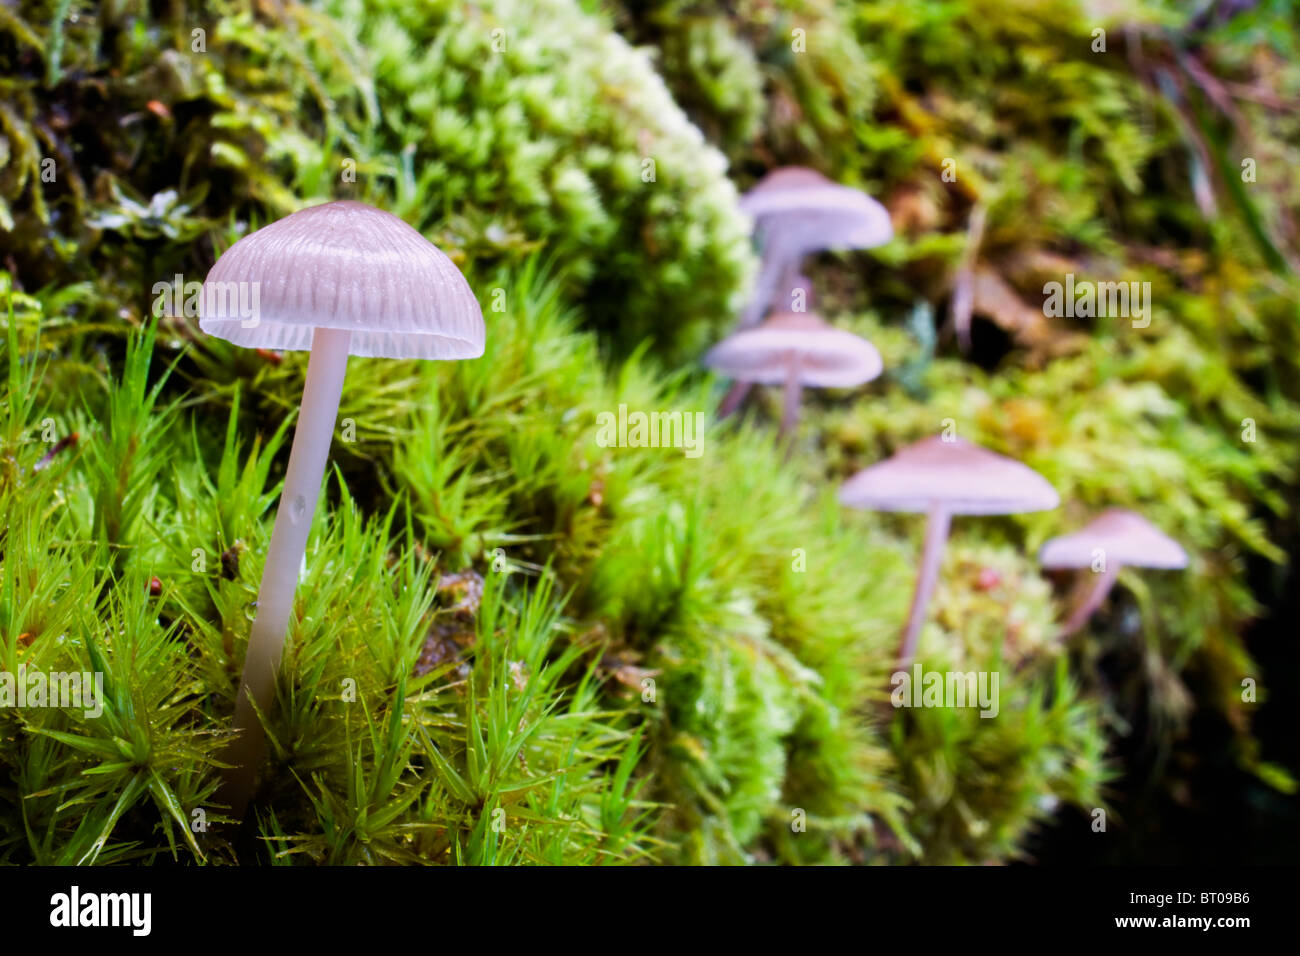 Common Bonnet Fungi on moss covered log Stock Photo